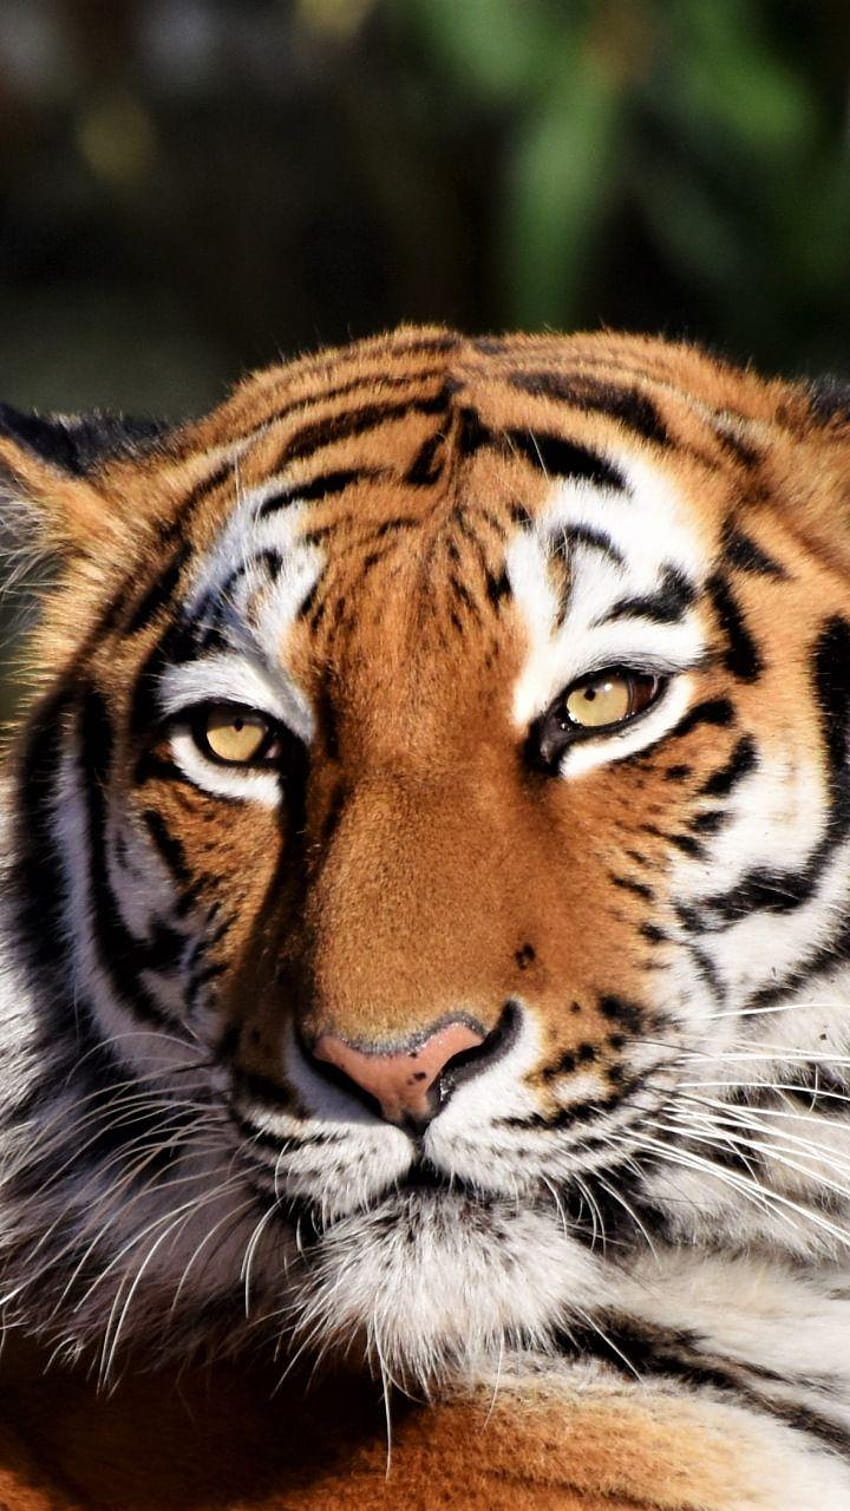 Tigre, gato montés, hocico, depredador, retrato, 720x1280, retrato de tigre fondo de pantalla del teléfono